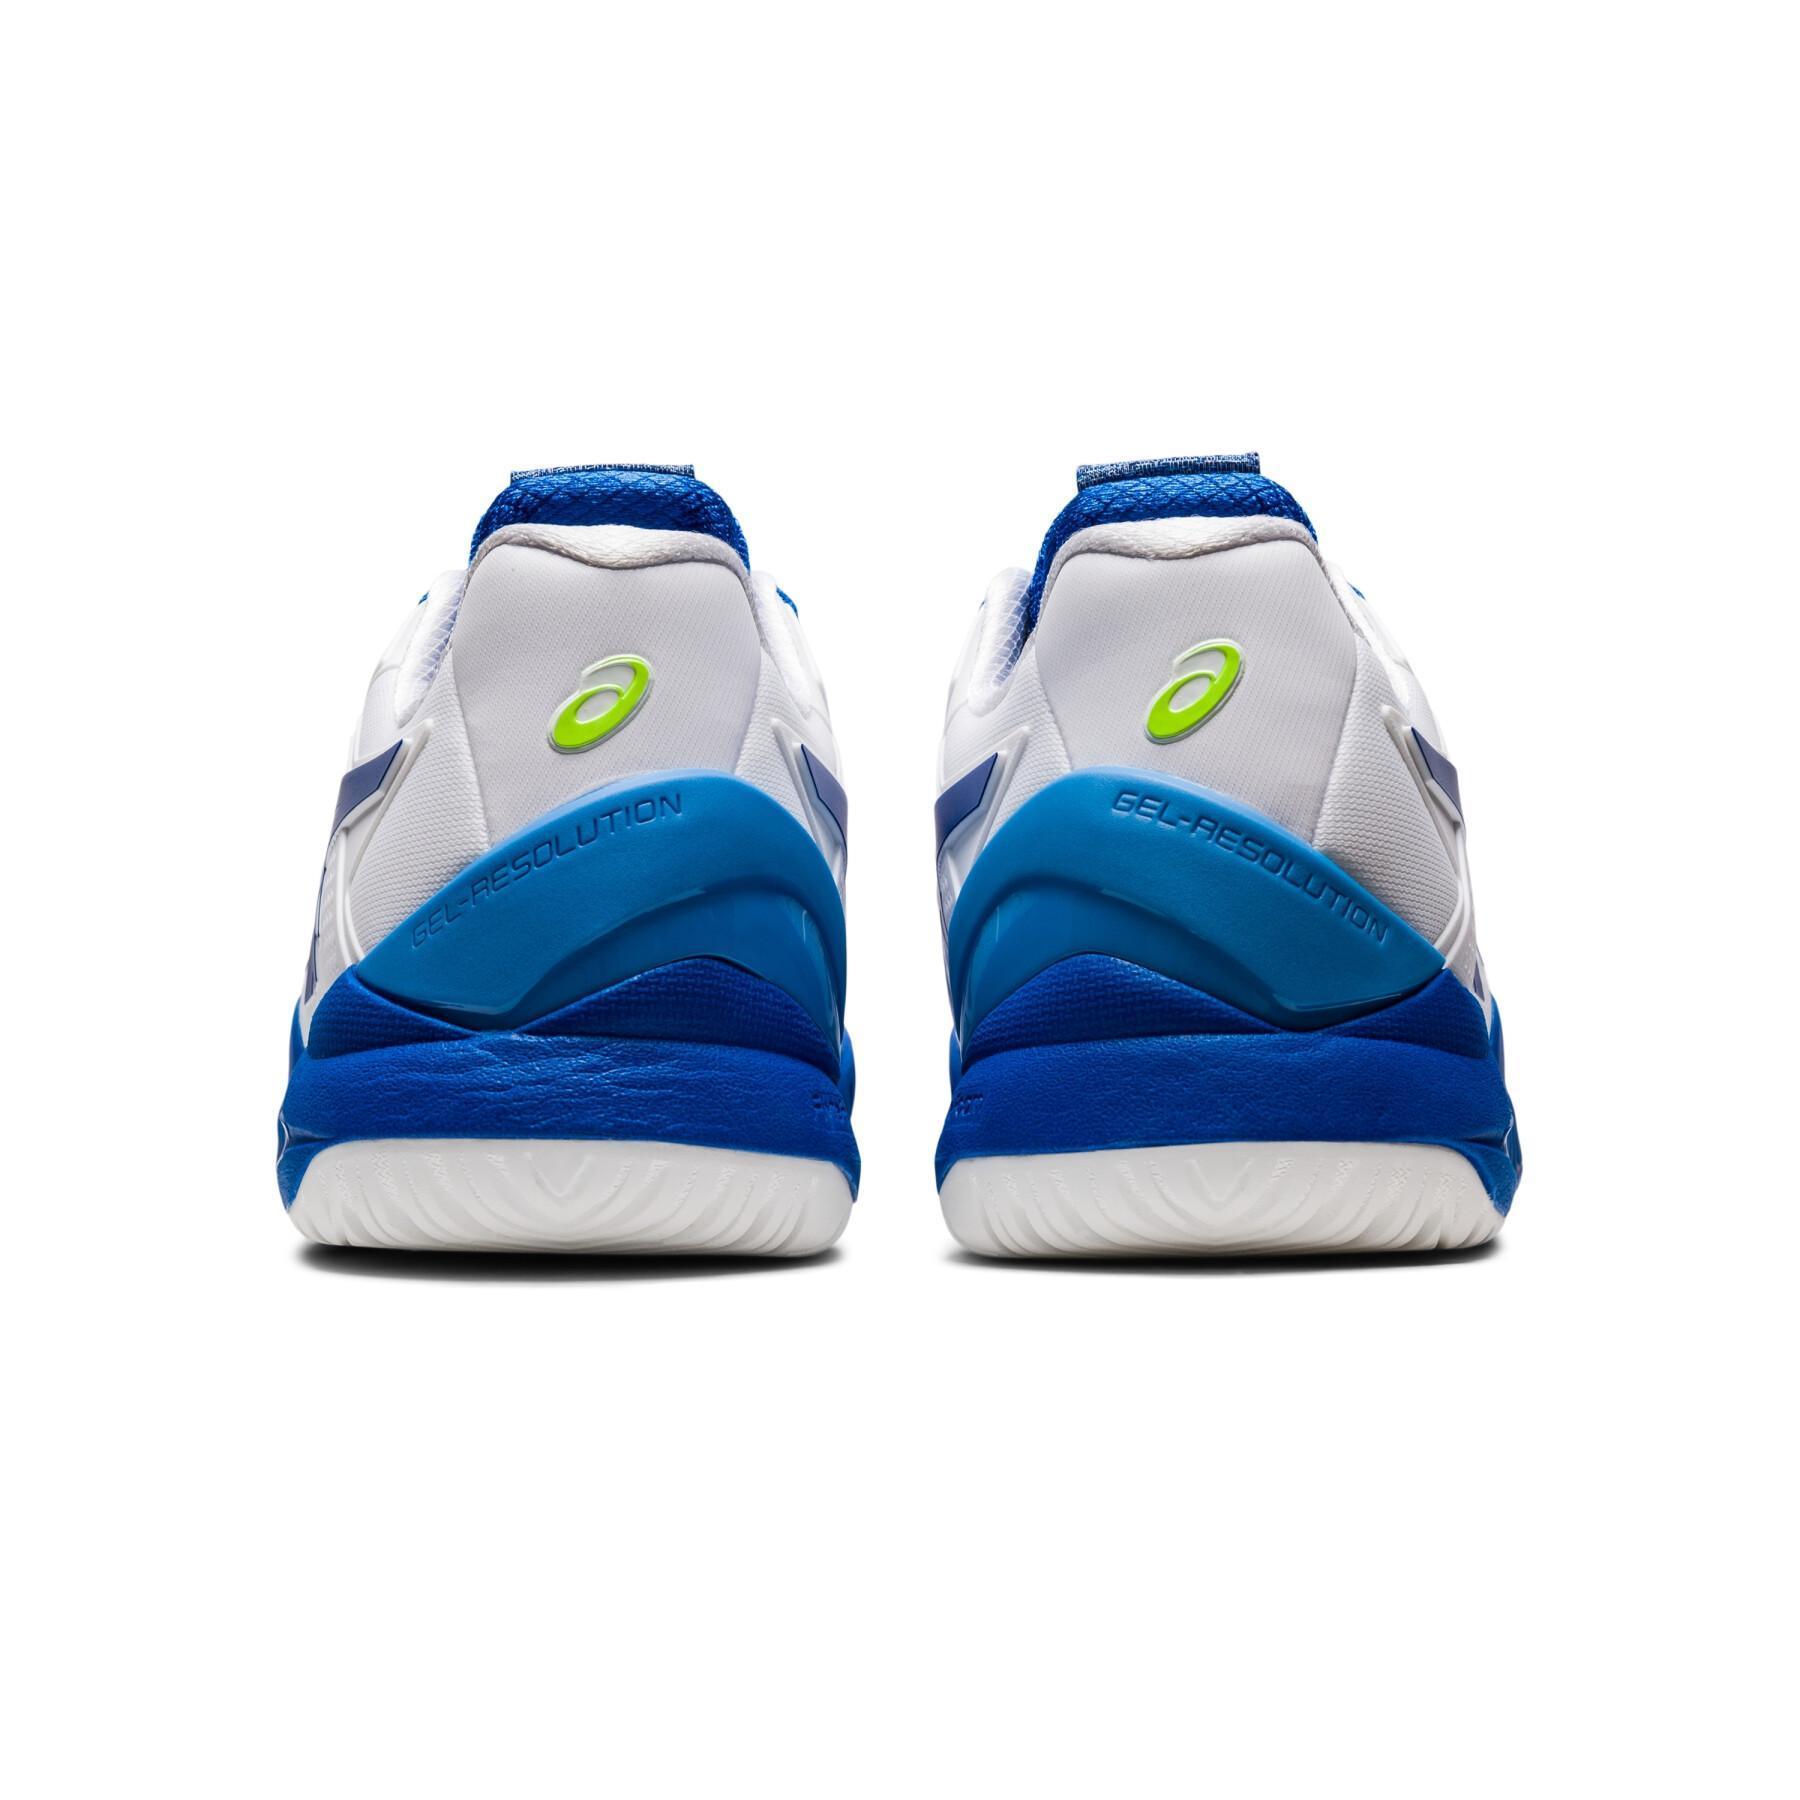 Tennis shoes Asics Gel-resolution 8